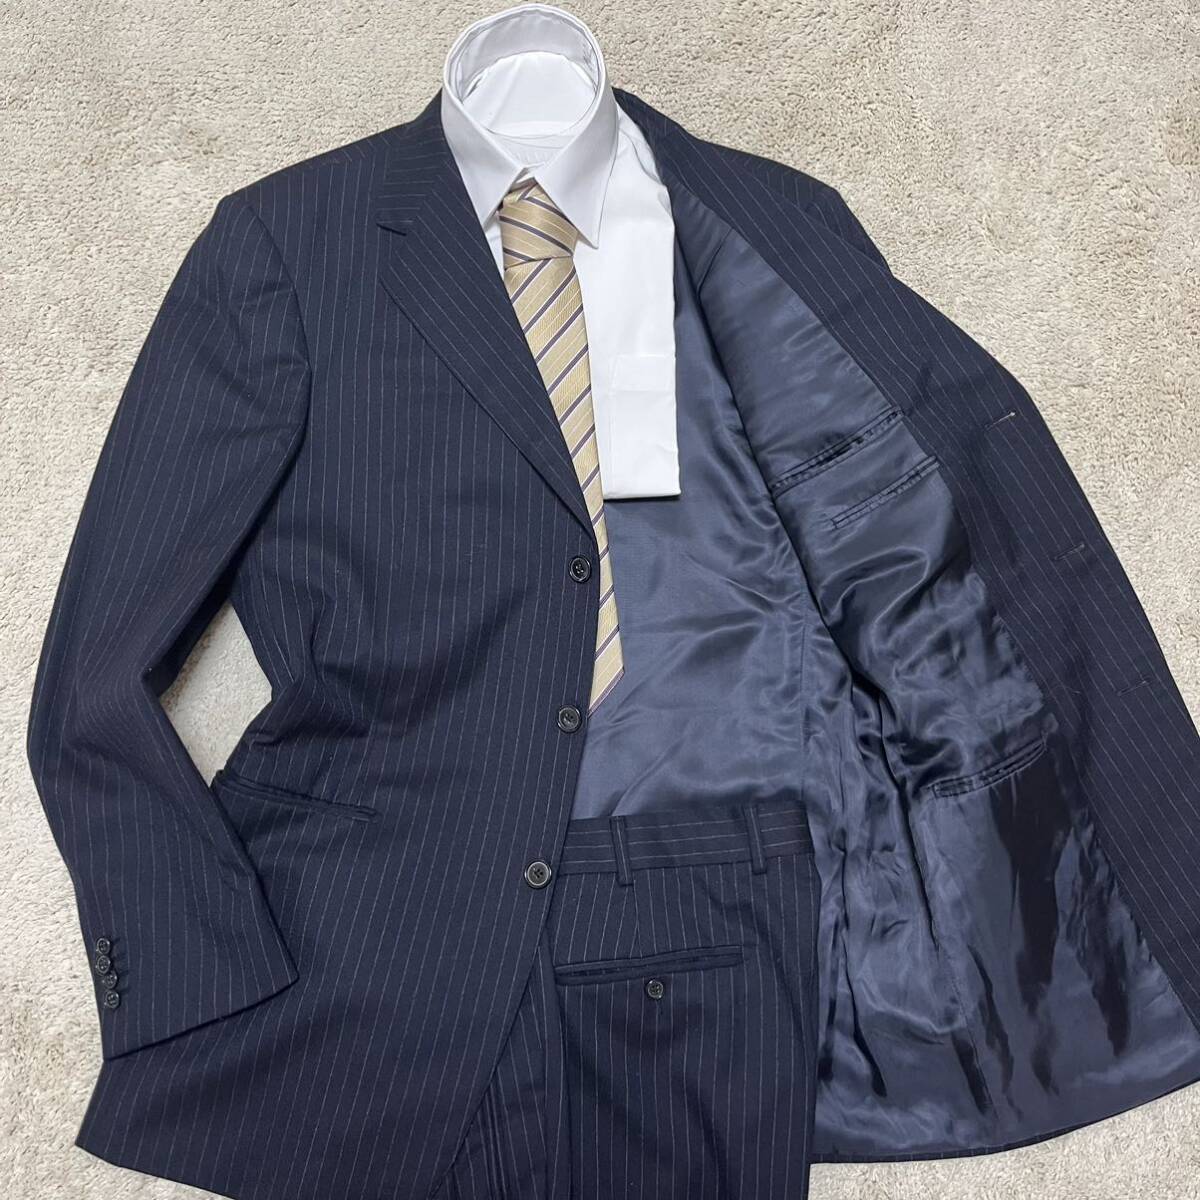 XXL! Ermenegildo Zegna [ gentleman. ..] Zegna SU MISURA suit setup jacket navy navy blue large size 52